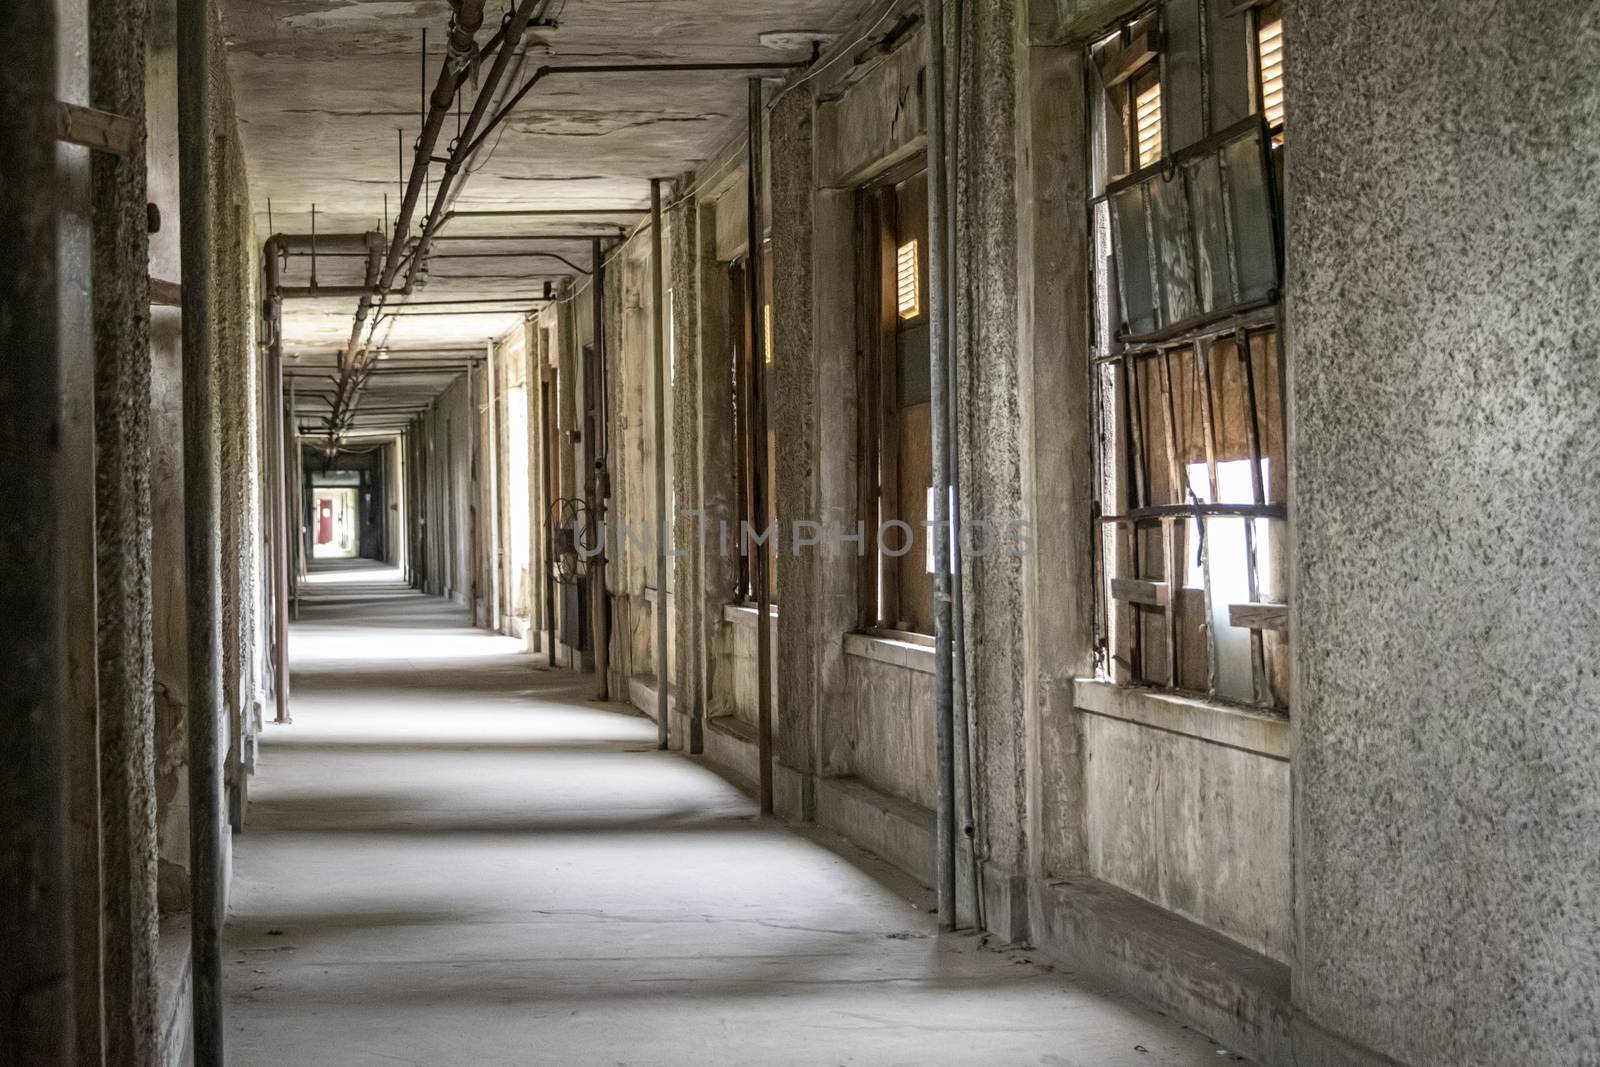 USA, New York, Ellis Island - May 2019: Corridor in abandoned hospital building